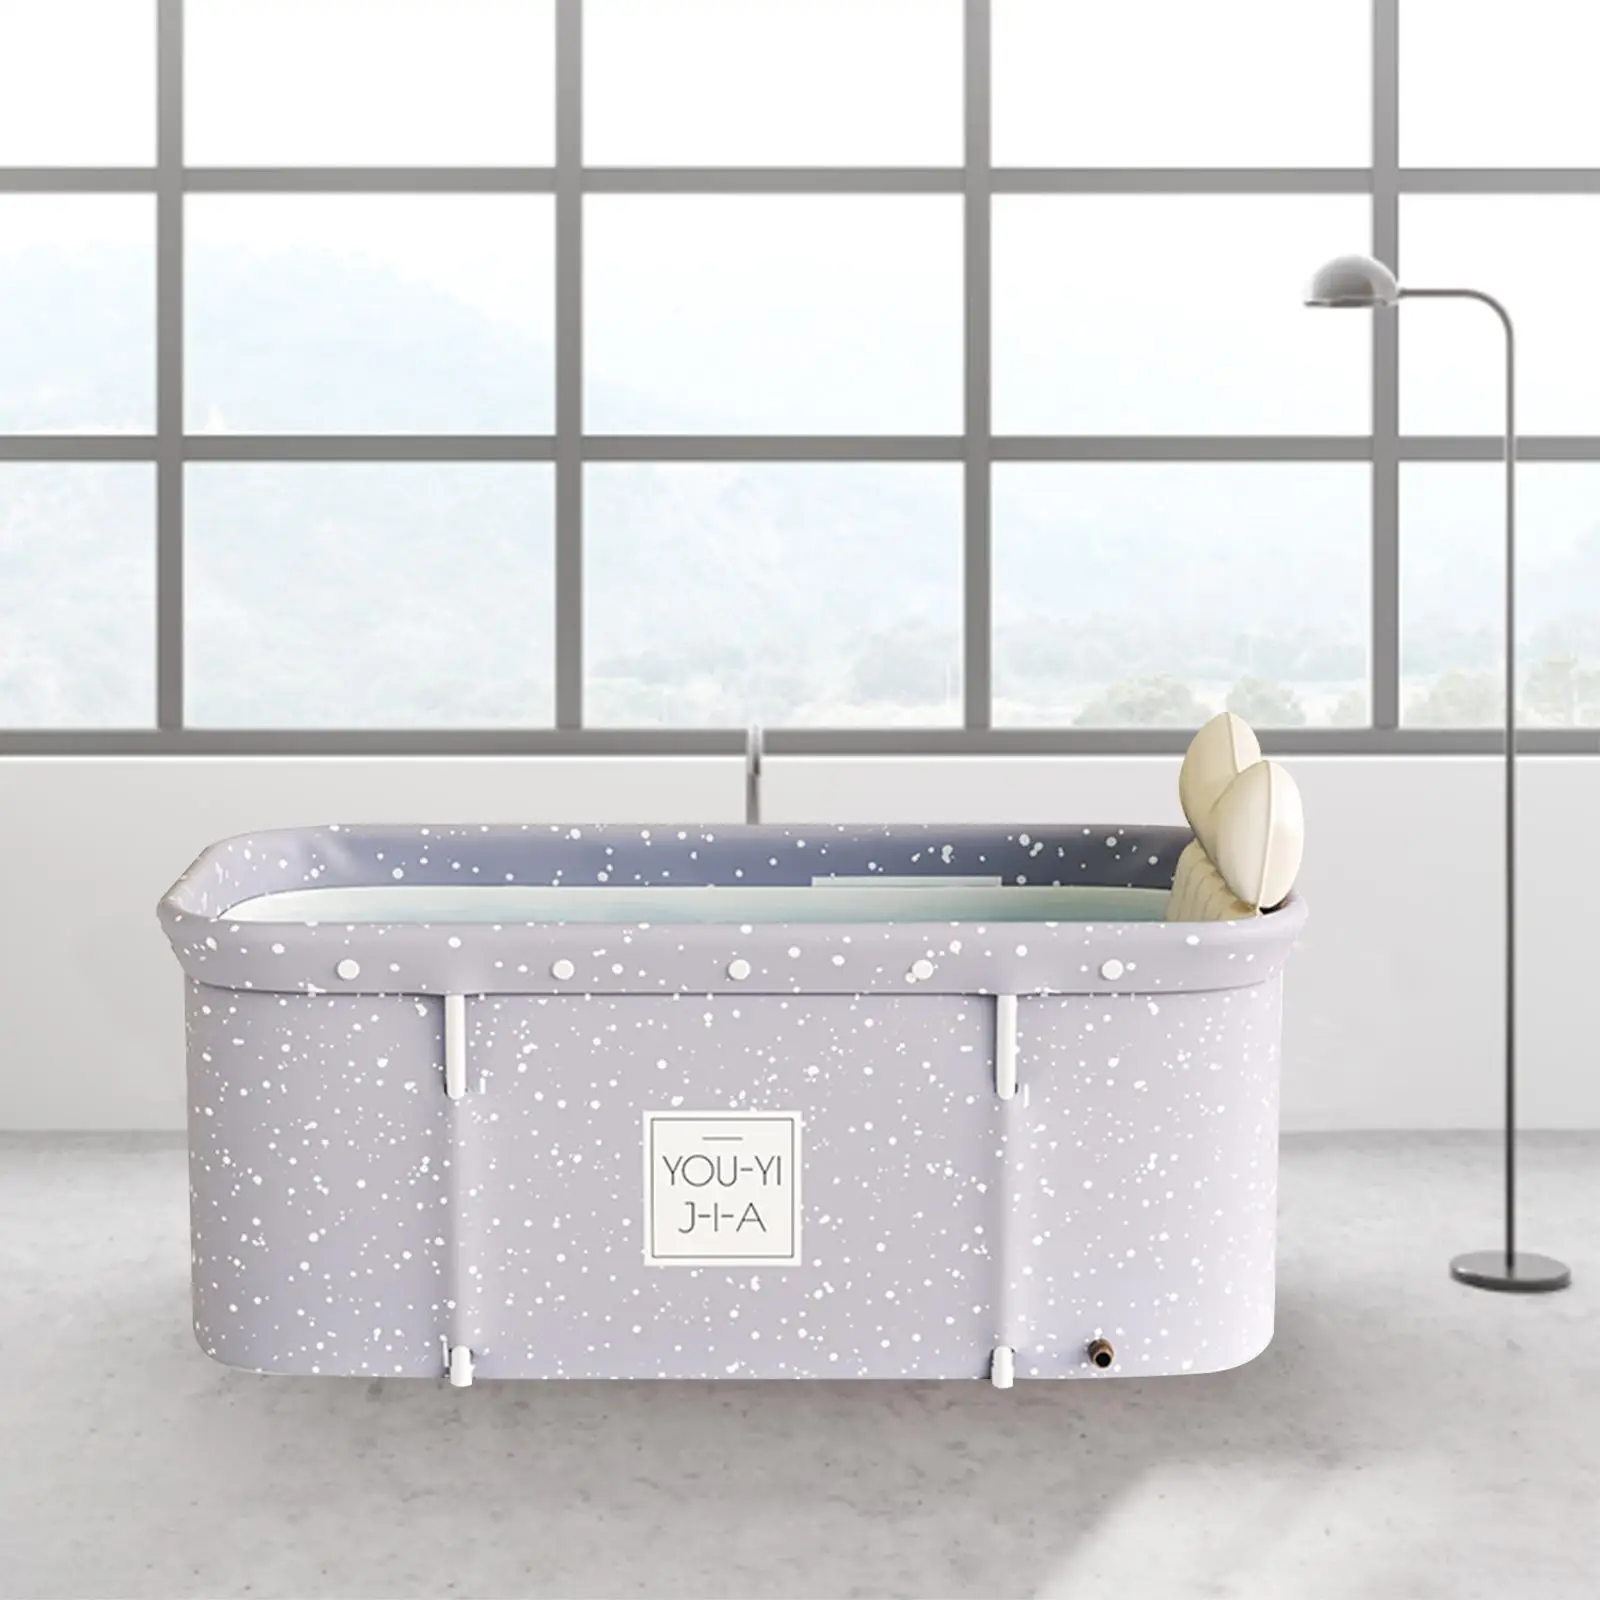 Foldable Bathroom Soaking Standing Bath Tub Seat Cushion Keep Temperature Free Standing Bathing Hot Tub for Flower Bath Bathroom